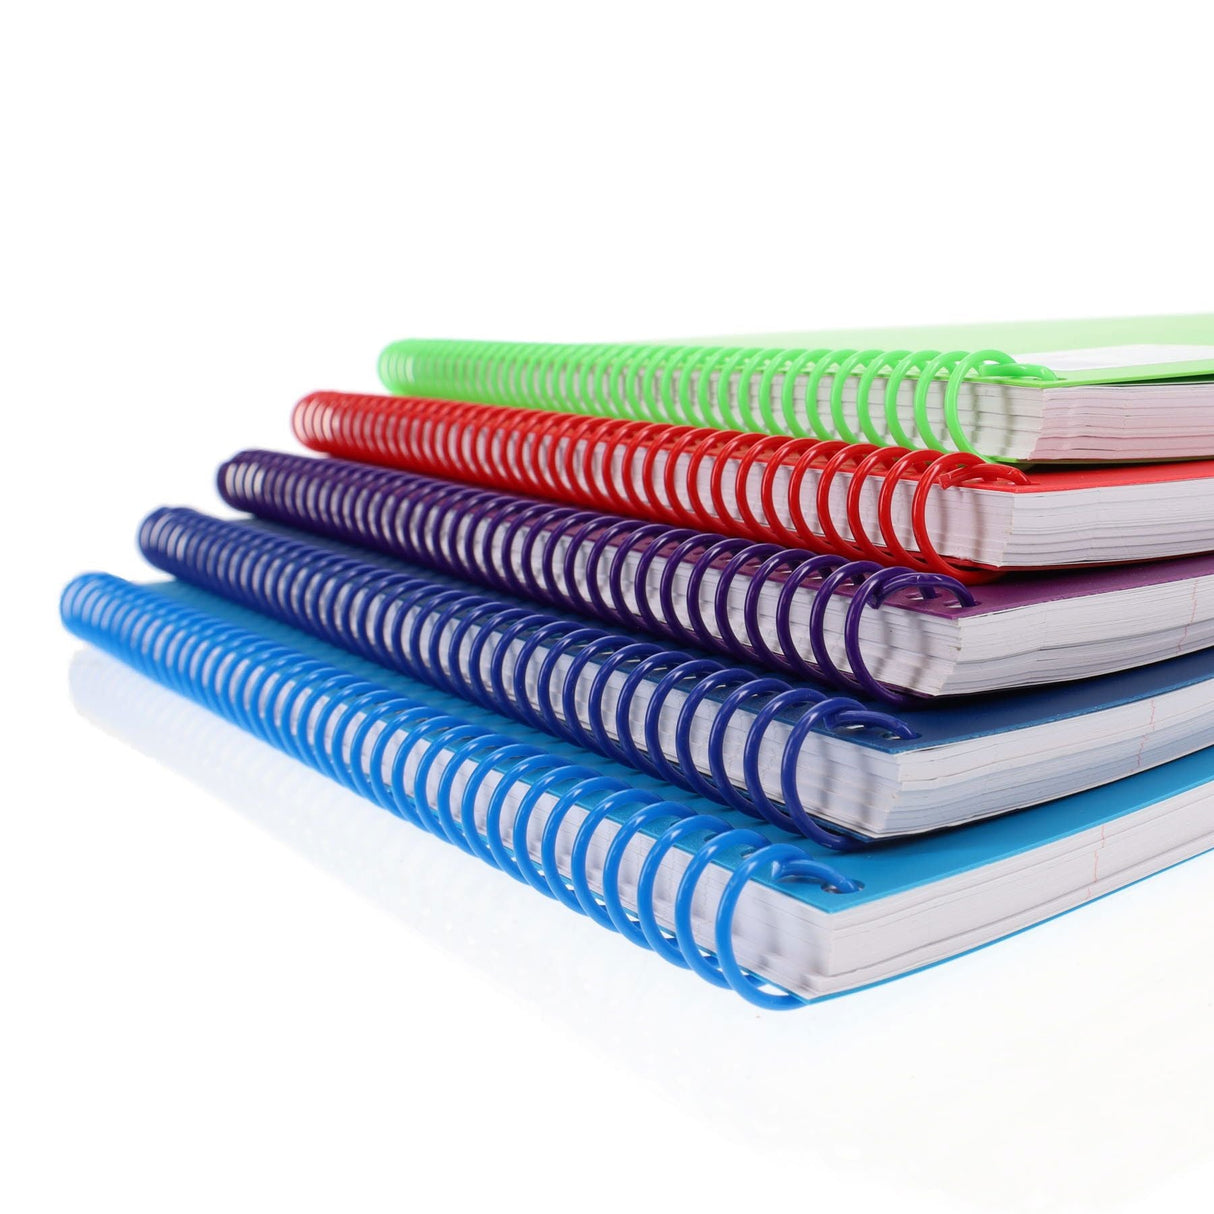 Premto A4 Spiral Notebook PP - 160 Pages - Admiral Blue-A4 Notebooks-Premto|StationeryShop.co.uk